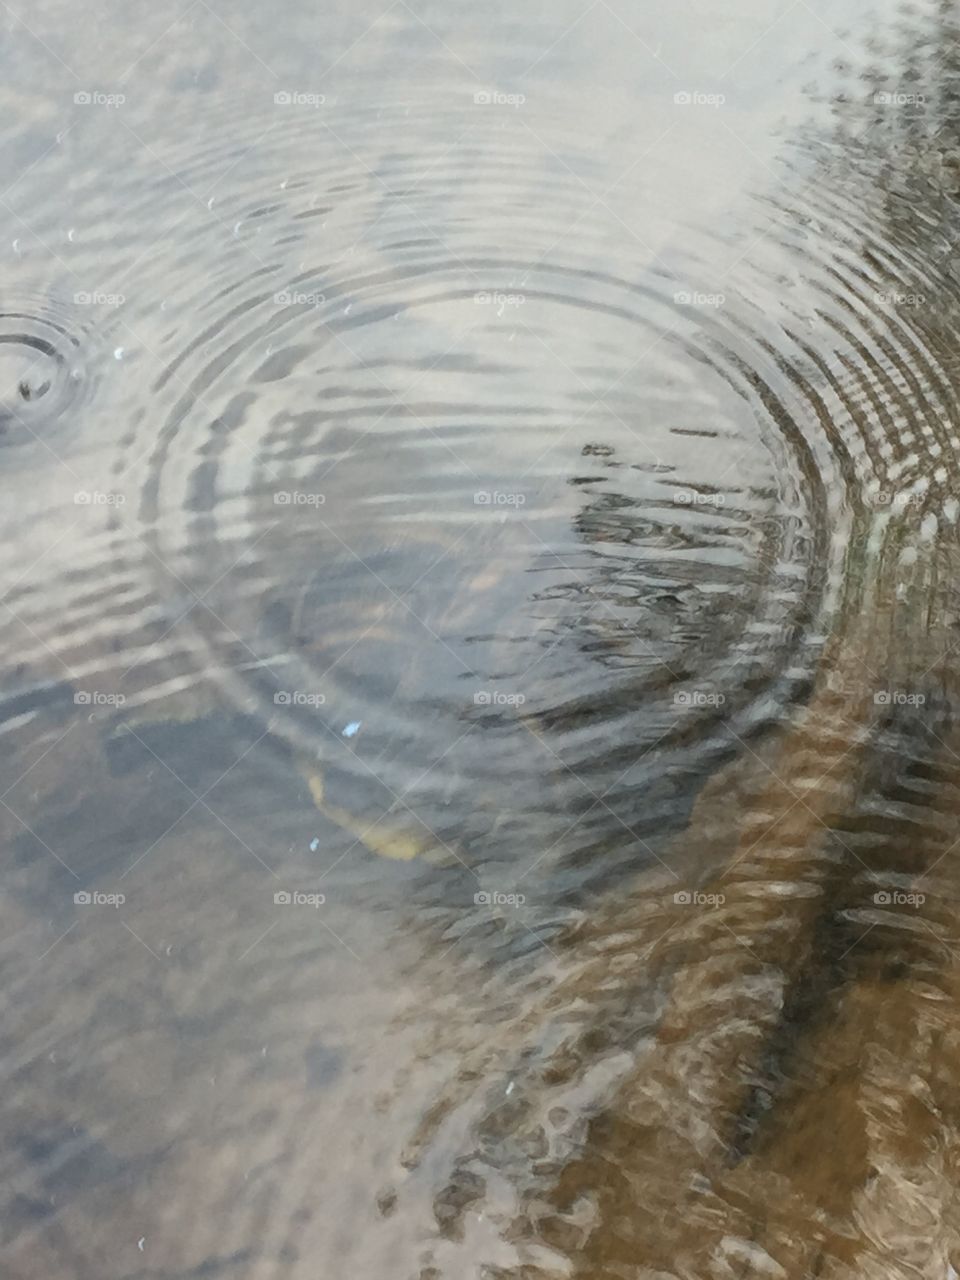 River Water Crop
Circles